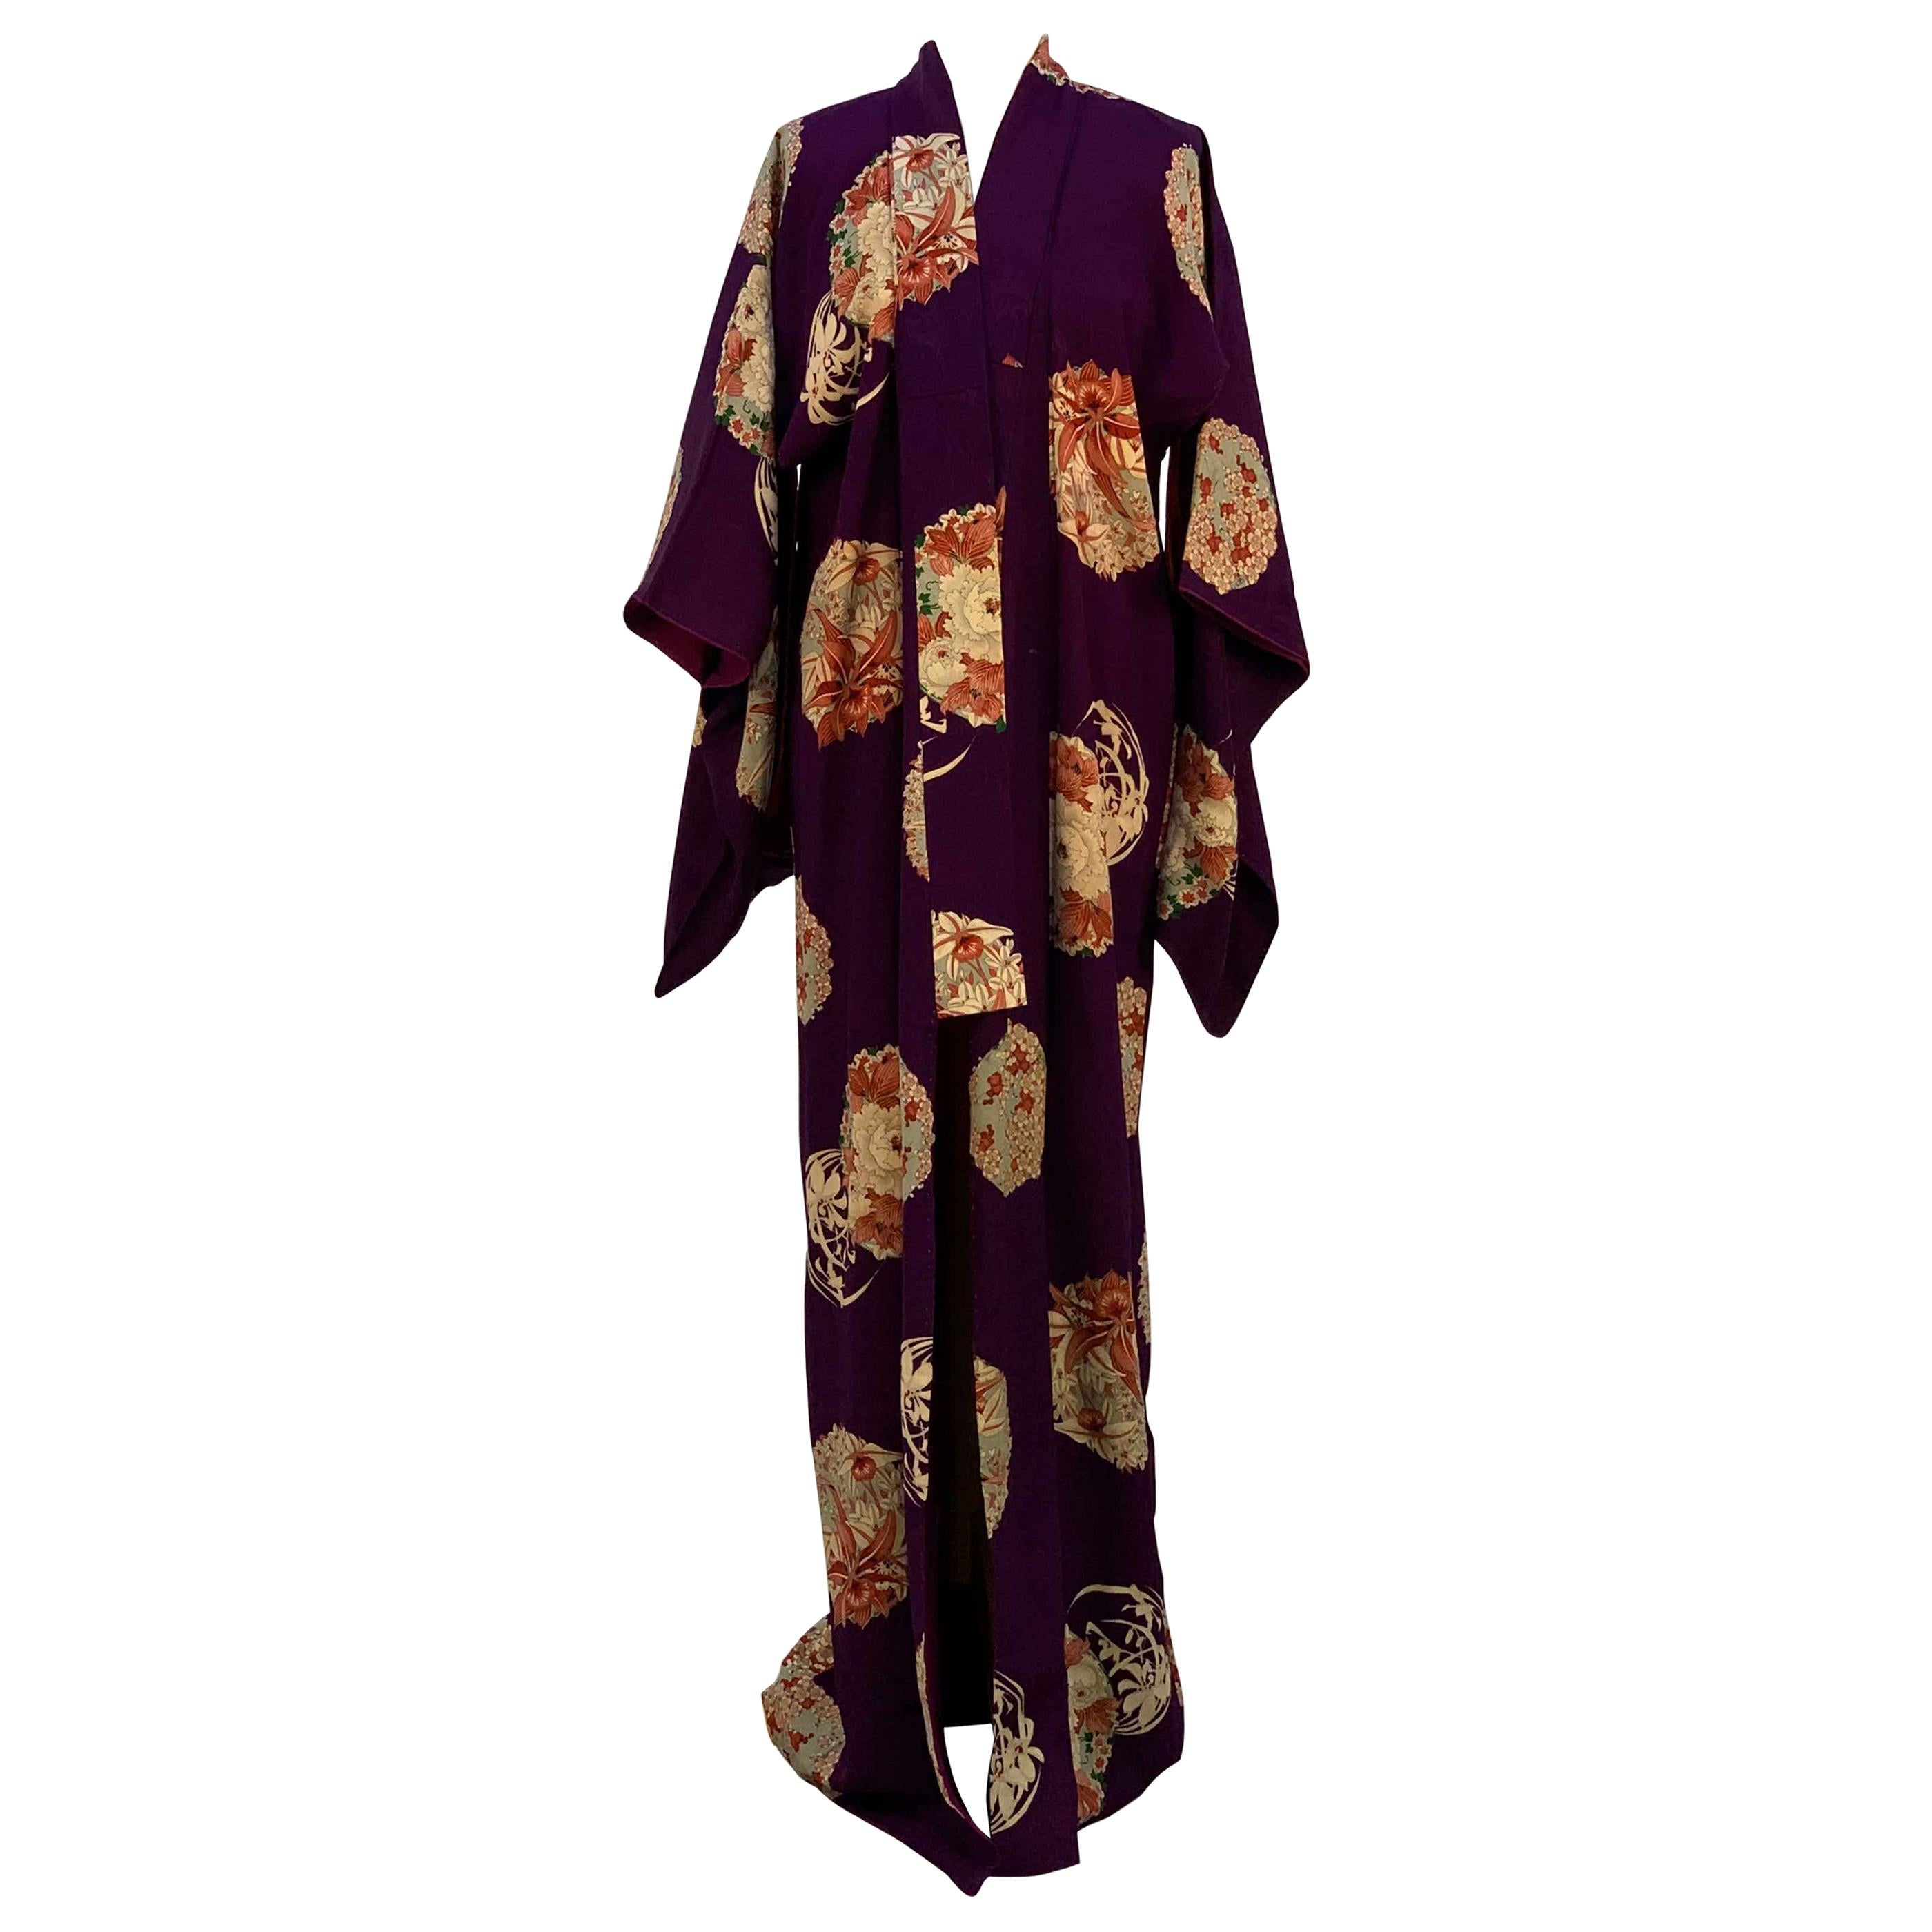 A vintage beautiful 1980s purple kimono